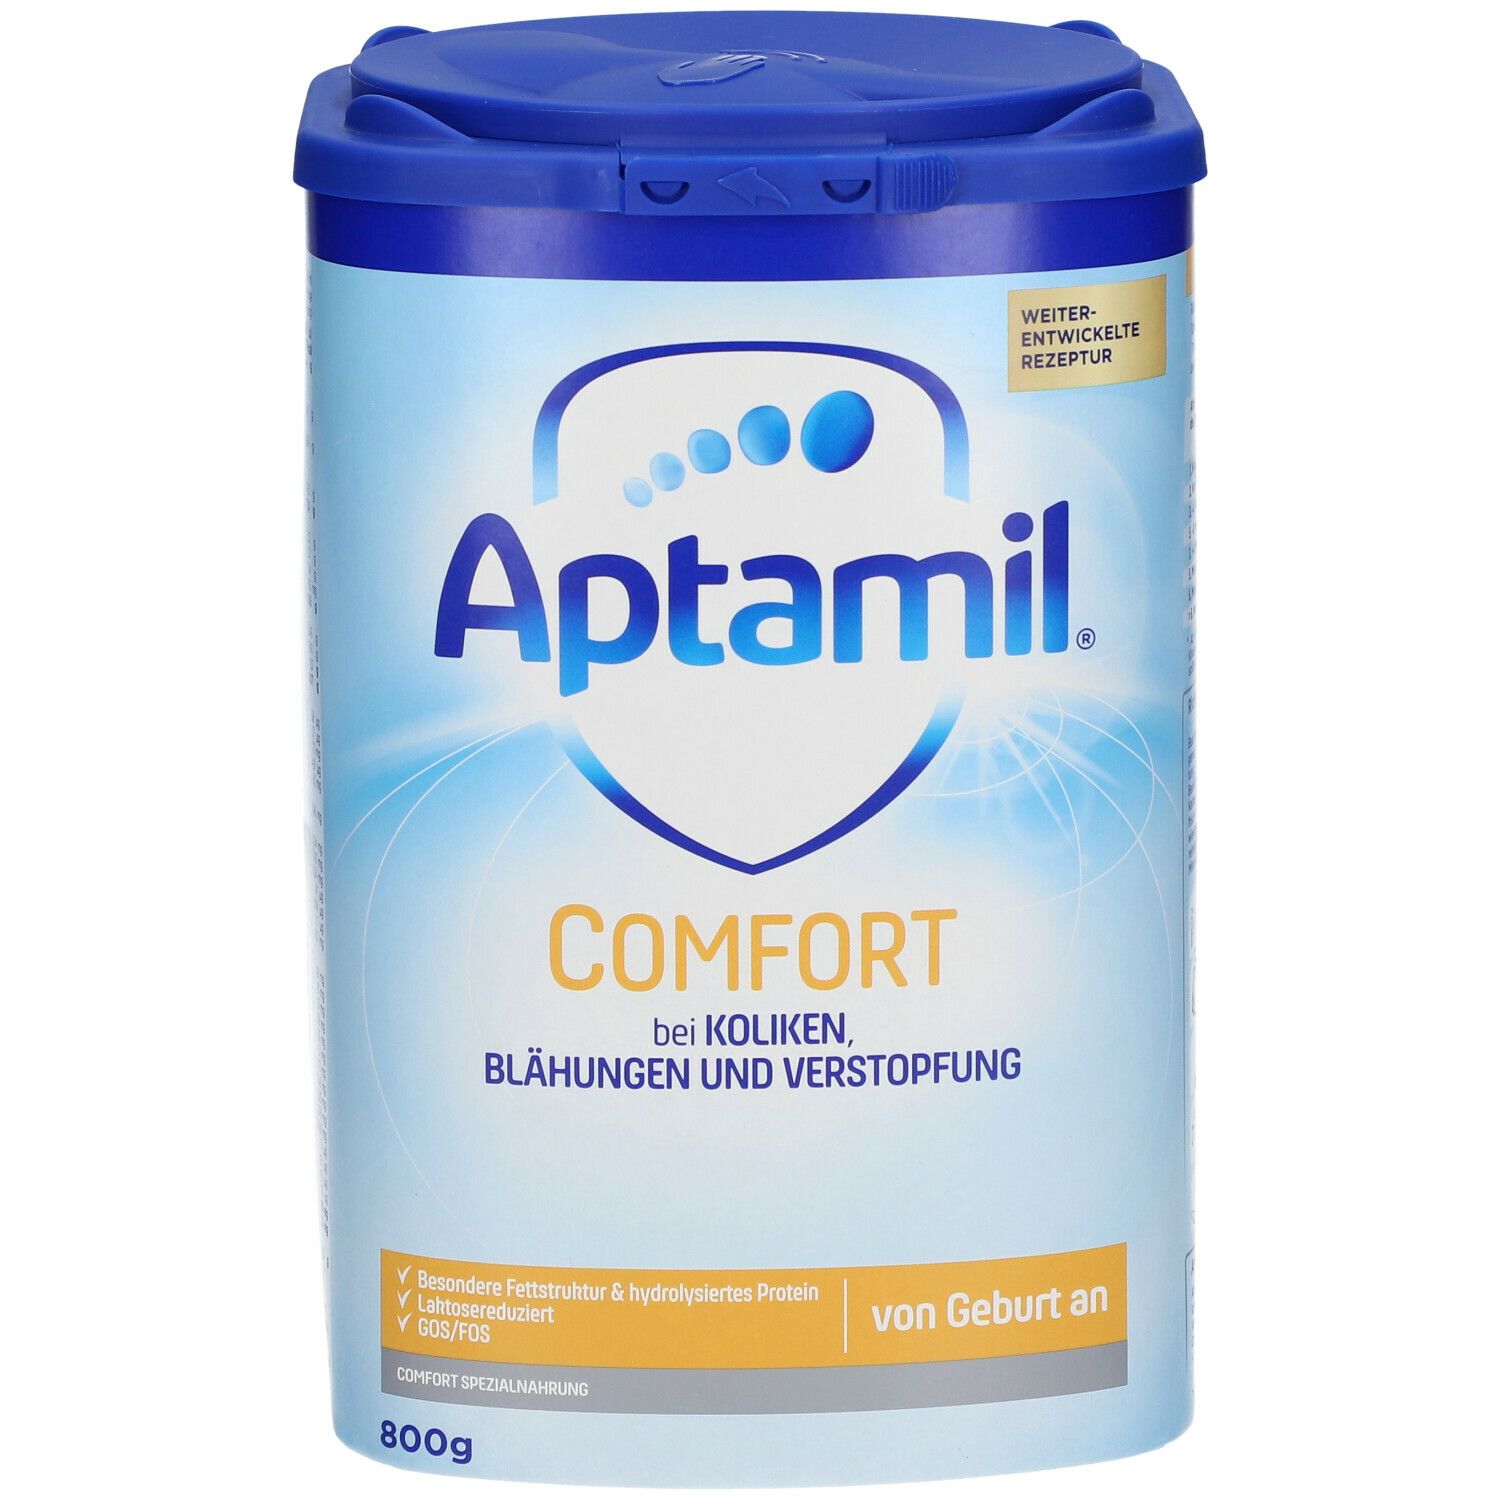  Aptamil® Proexpert Comfort